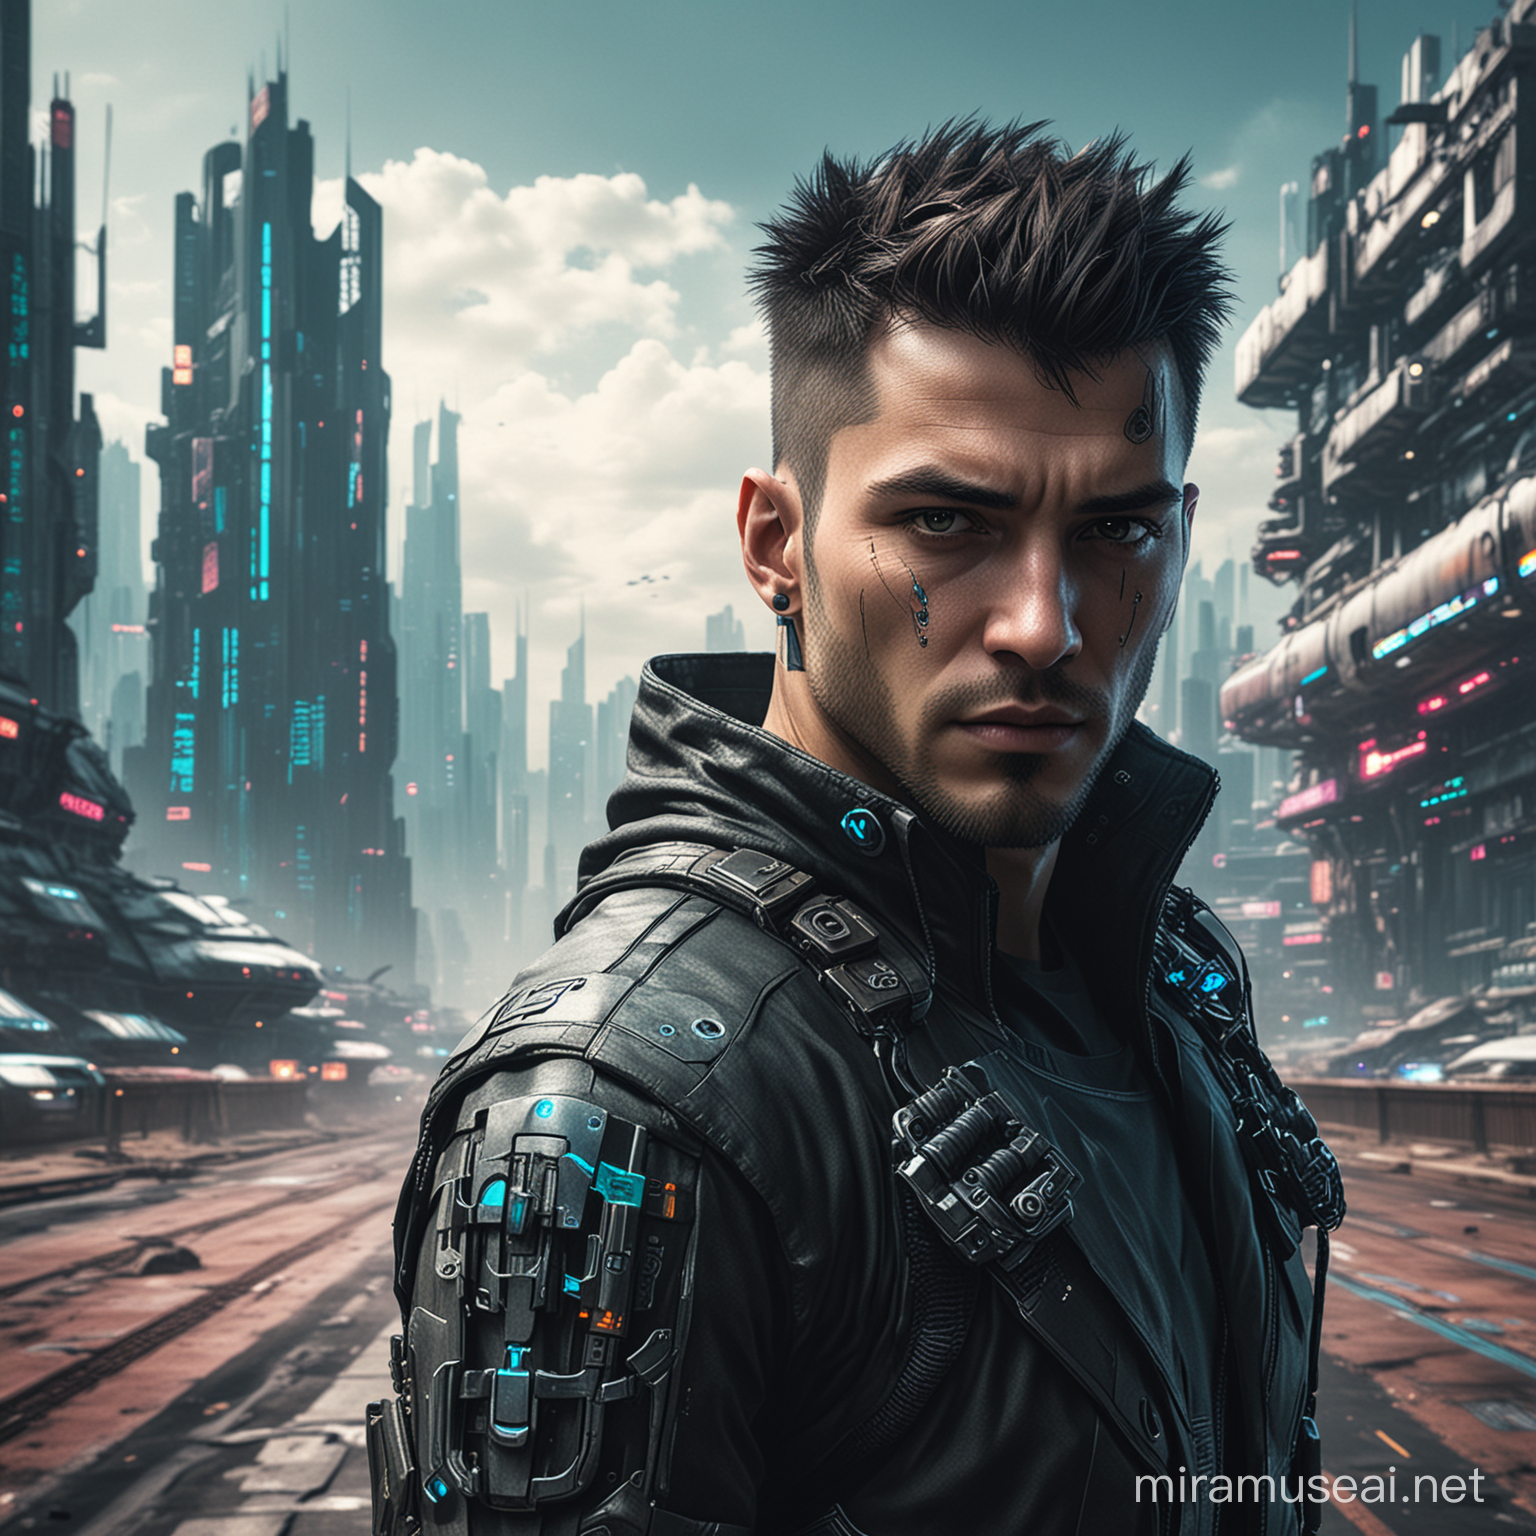 Futuristic Cyberpunk Man Gazing at Modern Cityscape